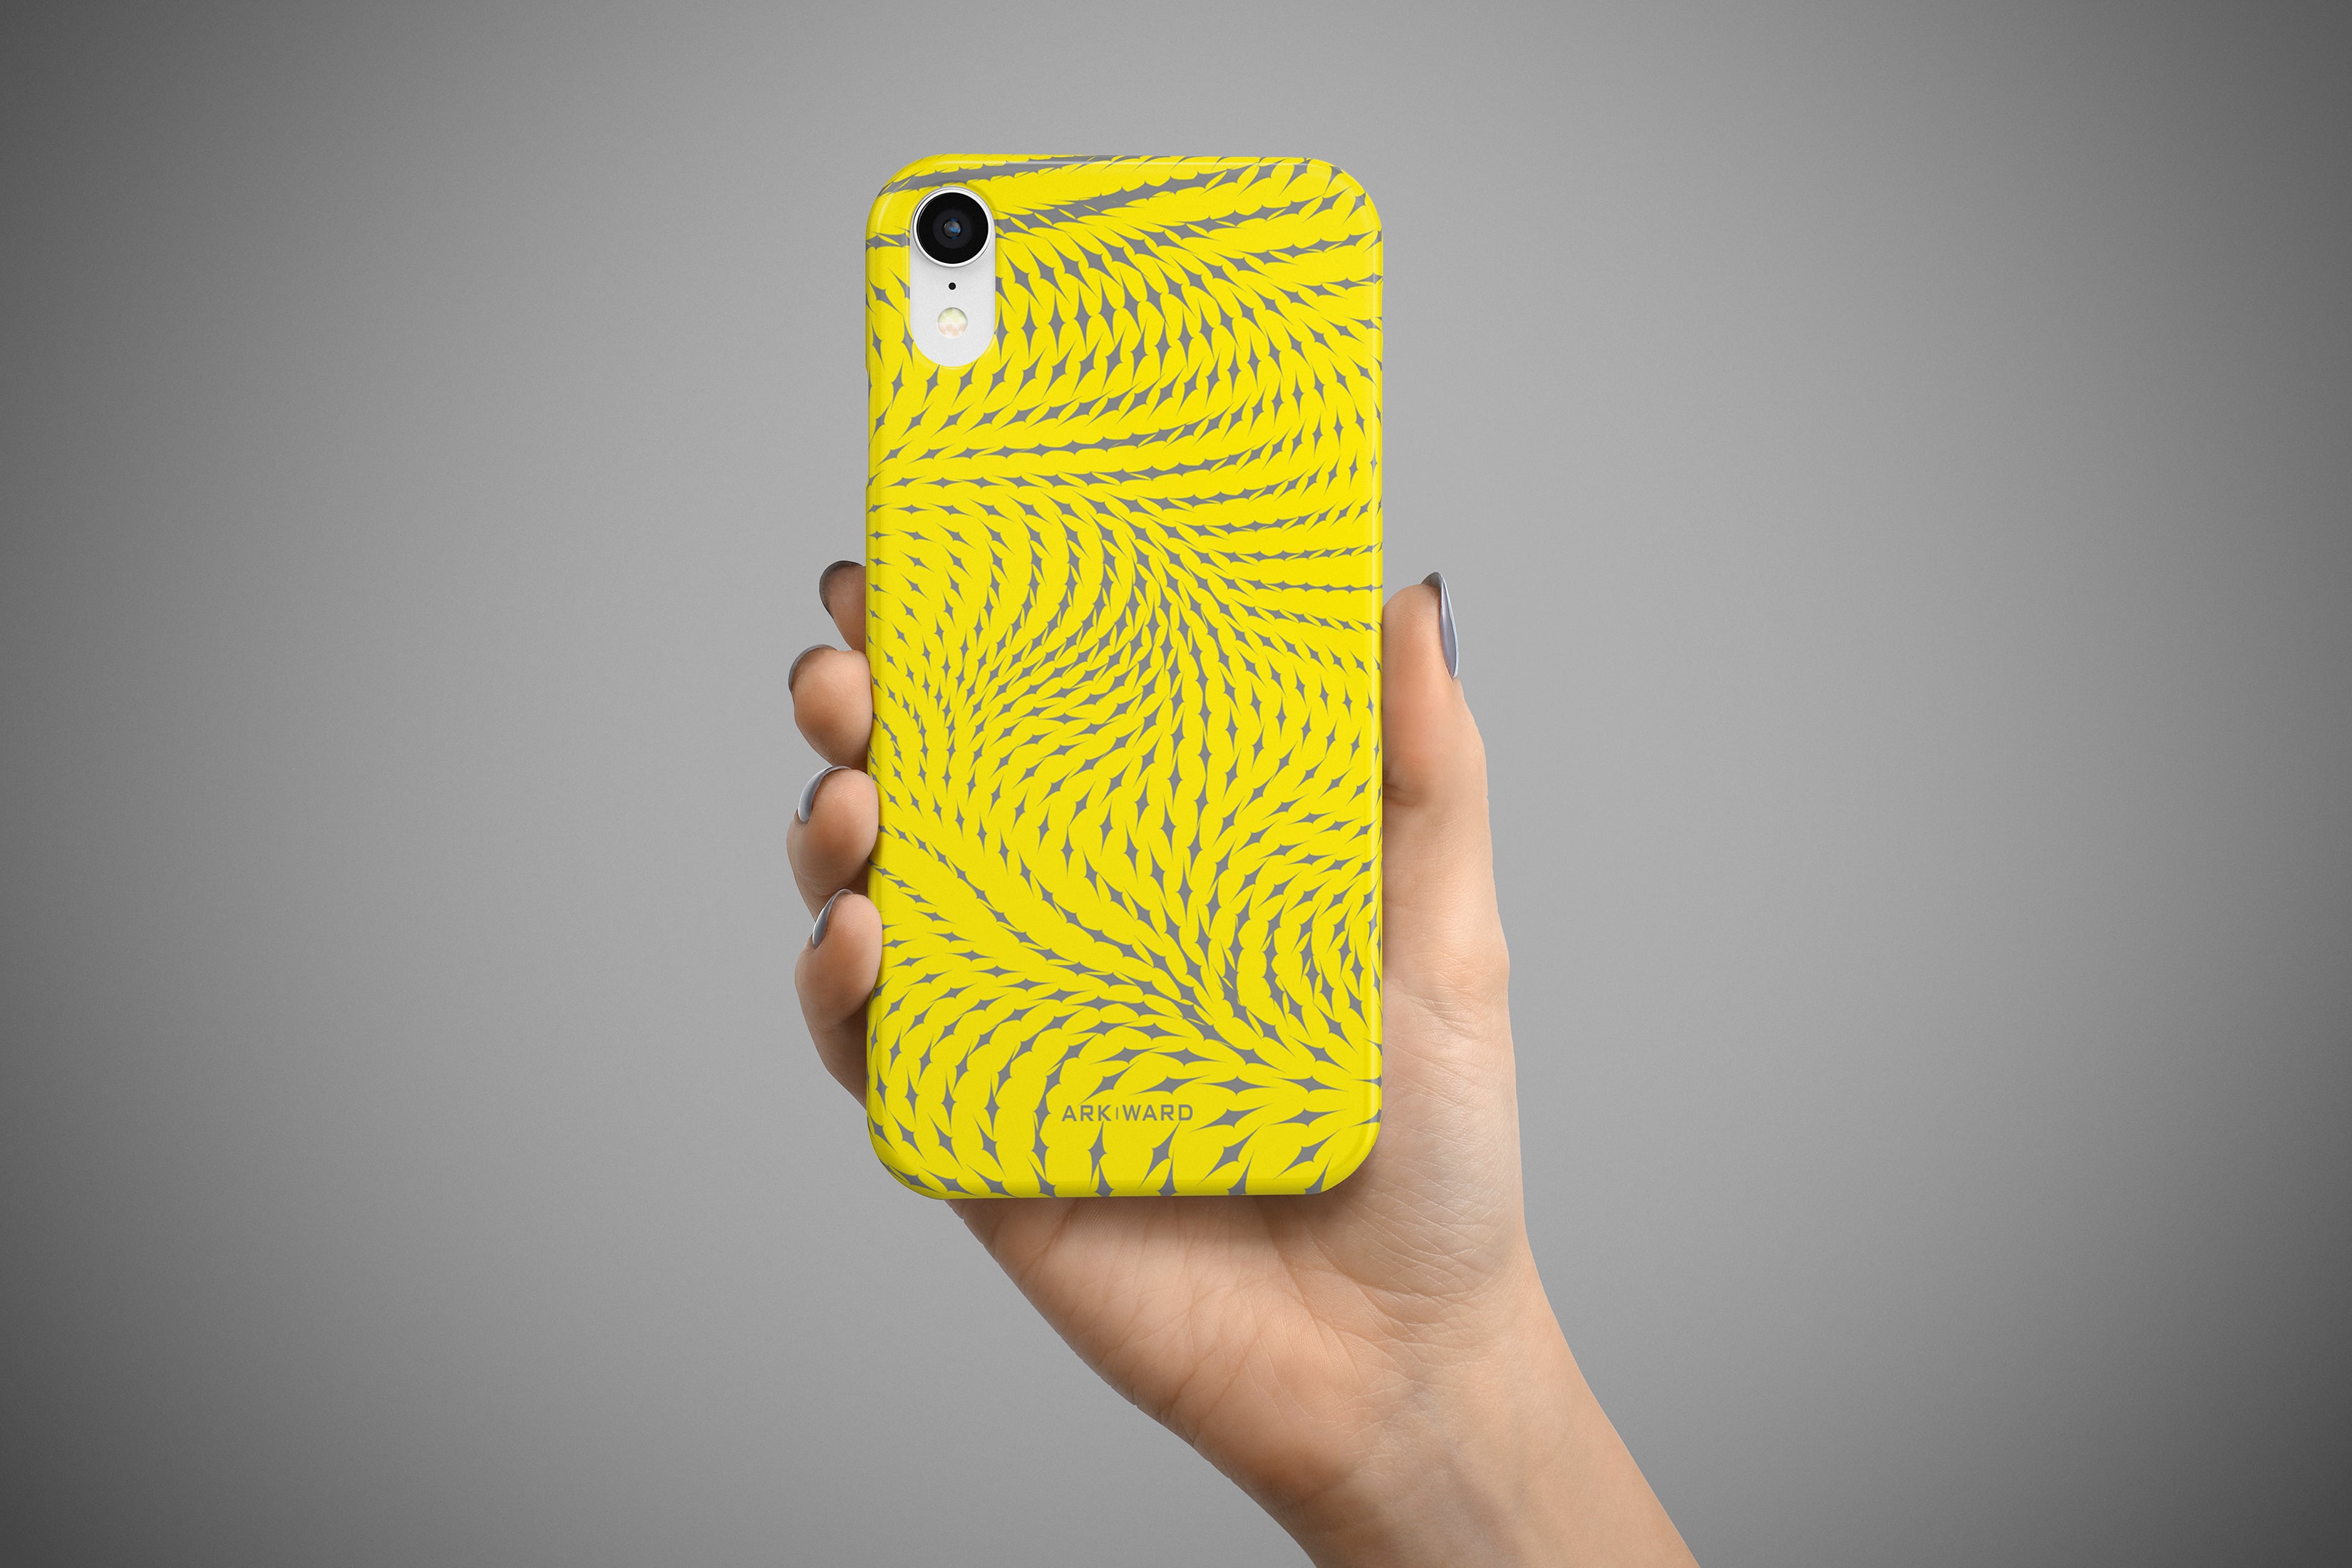 Arkward Yellow iPhone Case